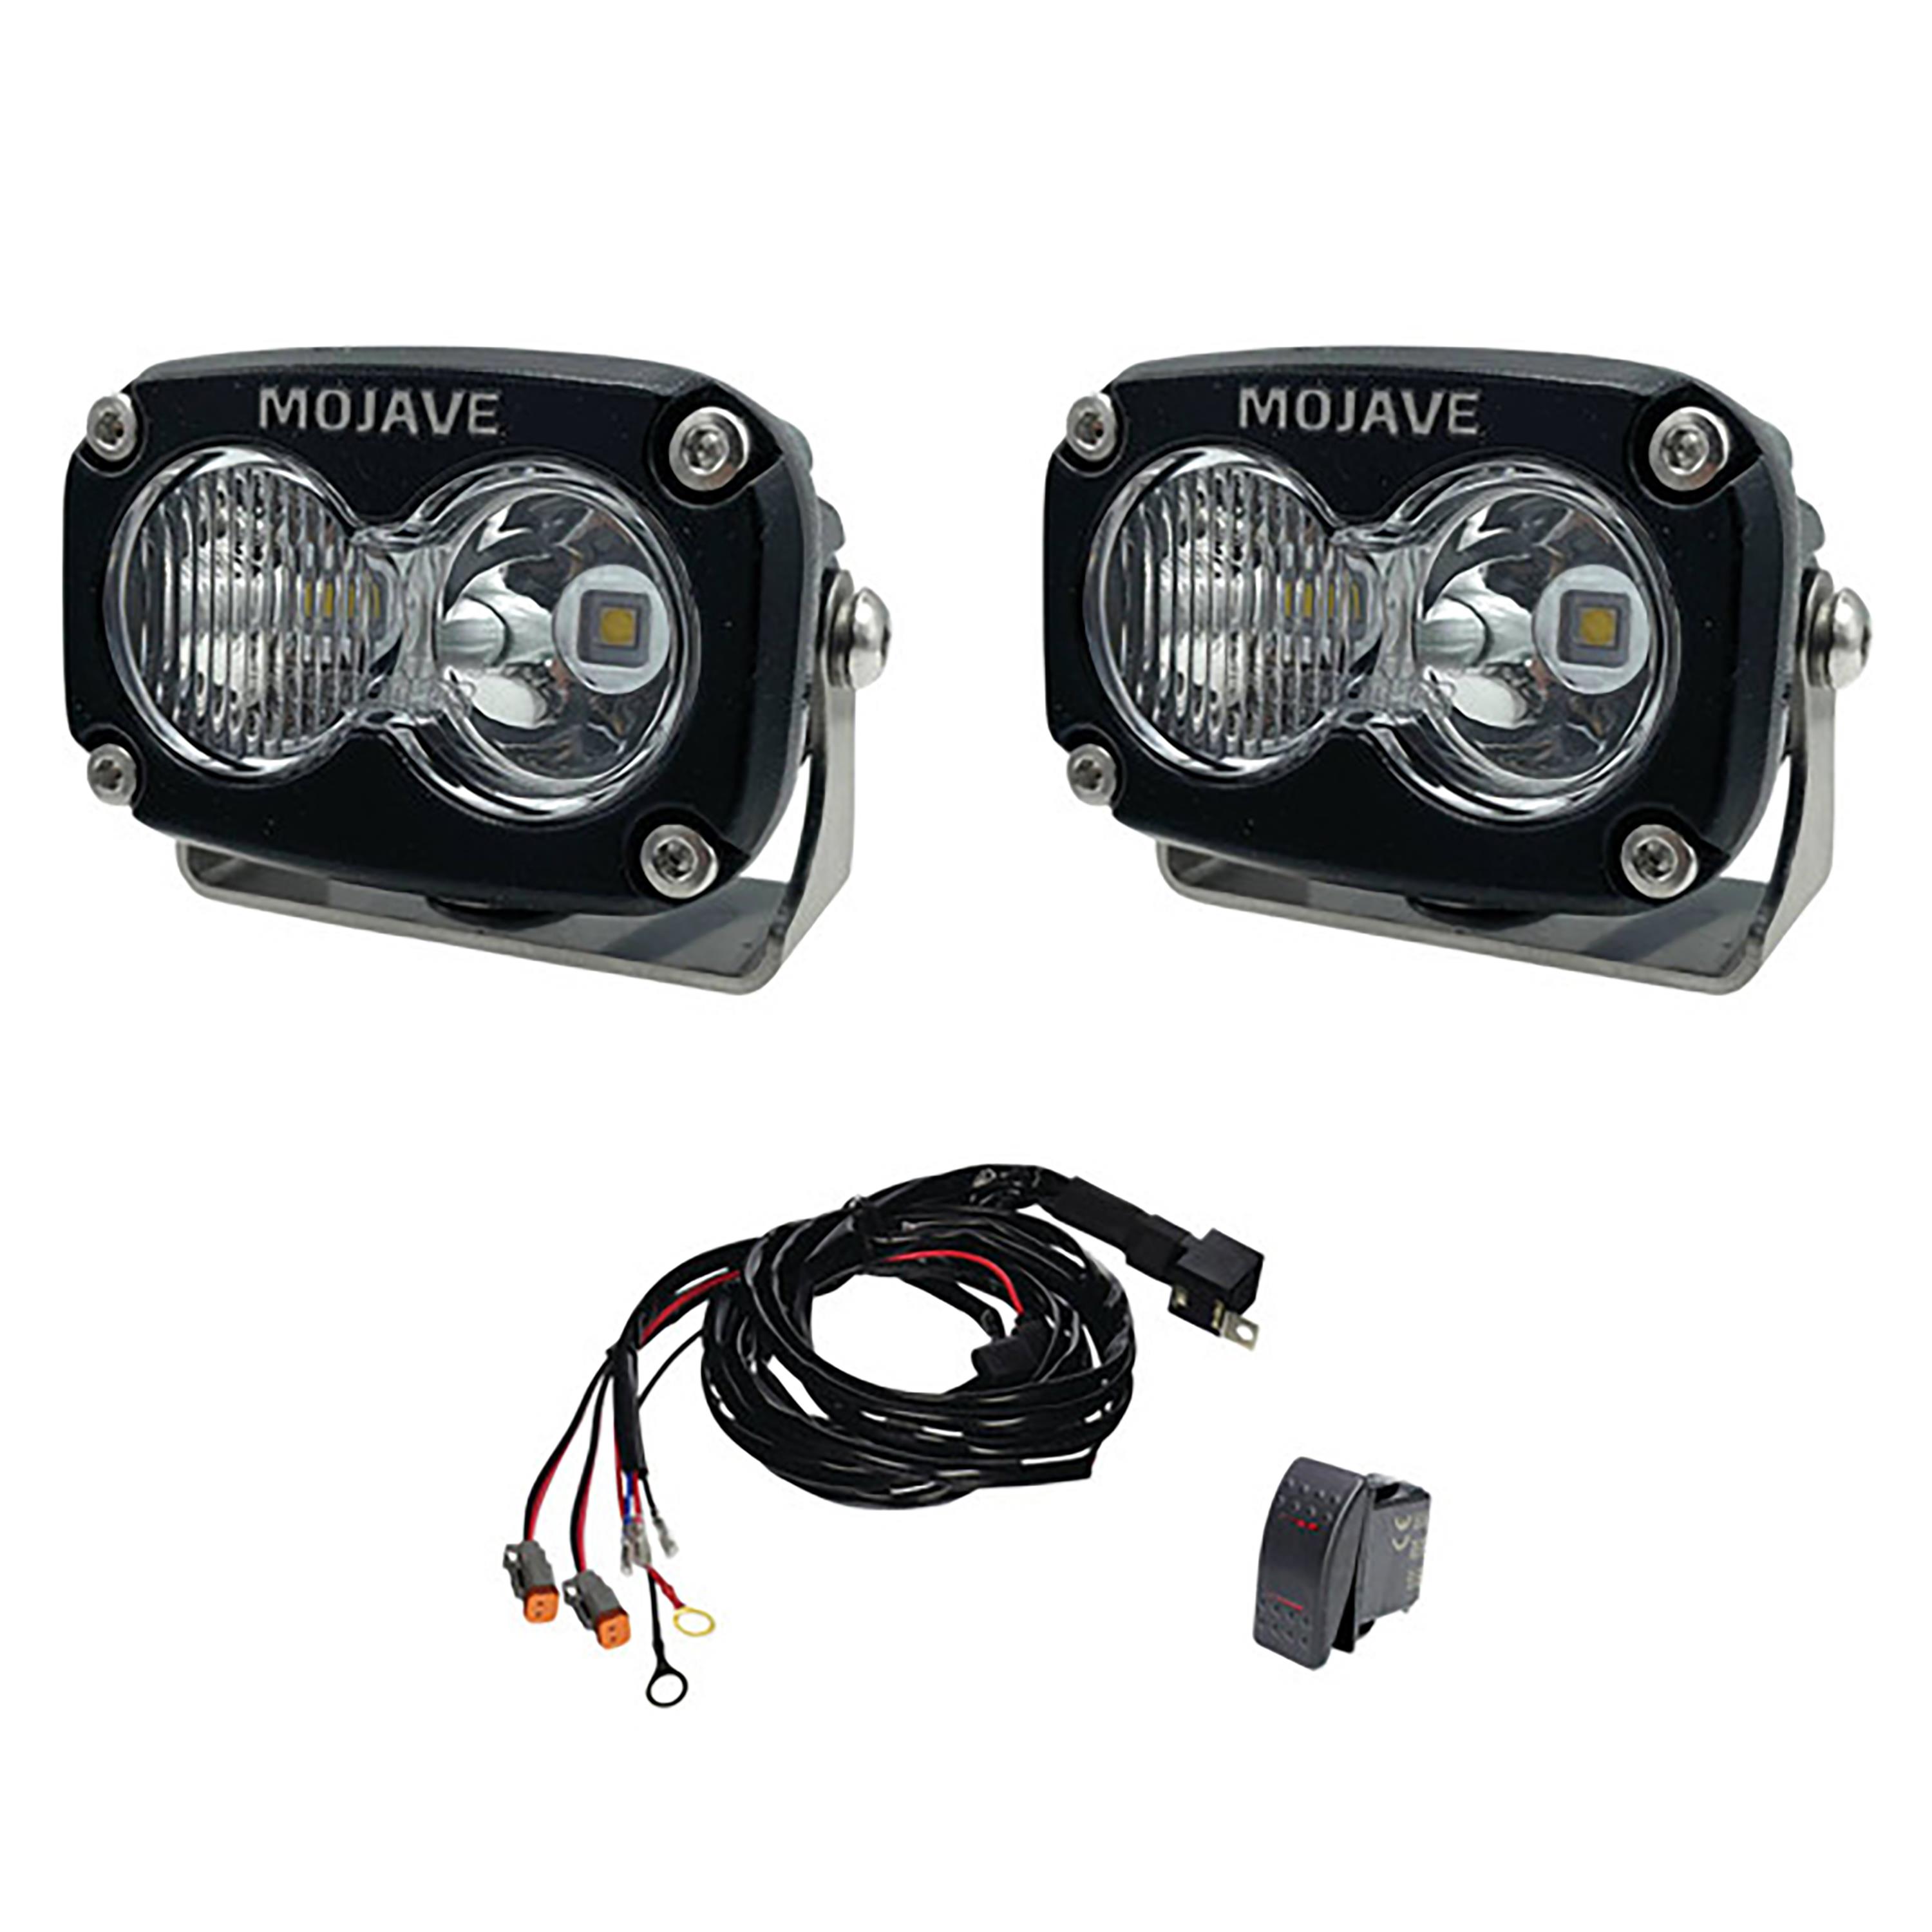 2 Inch x 3 Inch Mojave Series LED Racing Light Kit, 2 pk w/ Wiring Harness